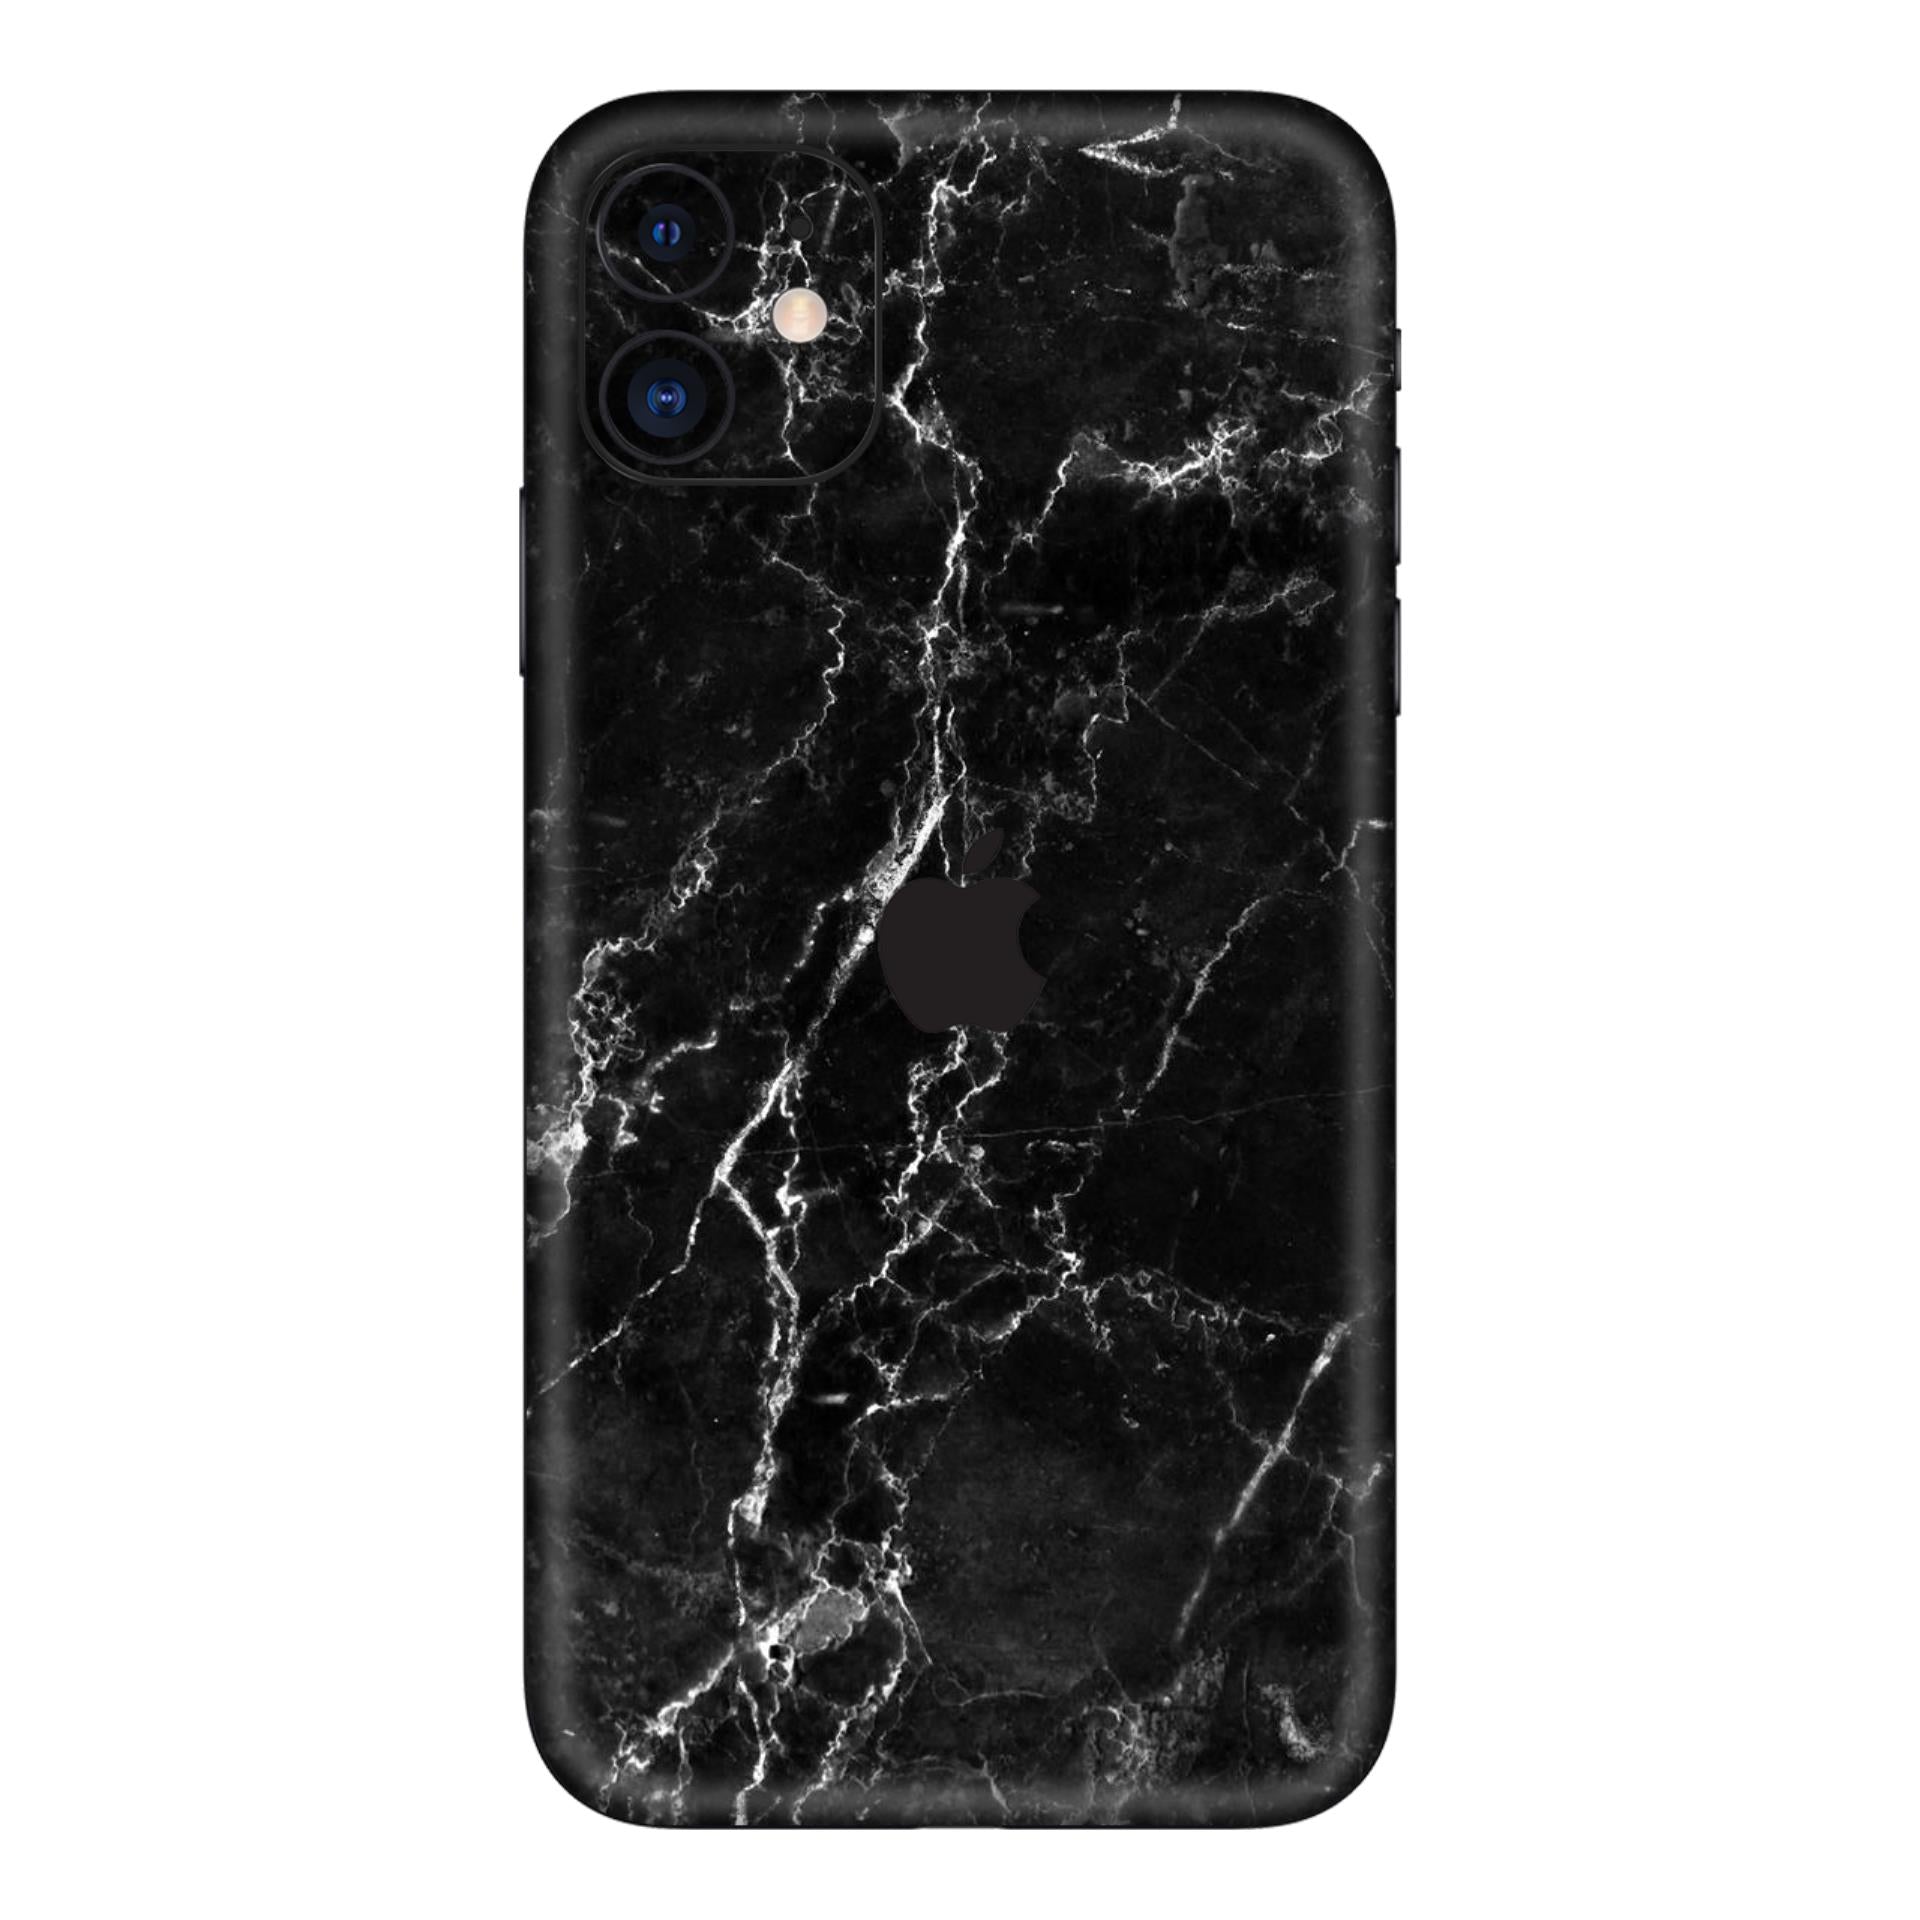 iPhone SE(2020) Skins & Wraps